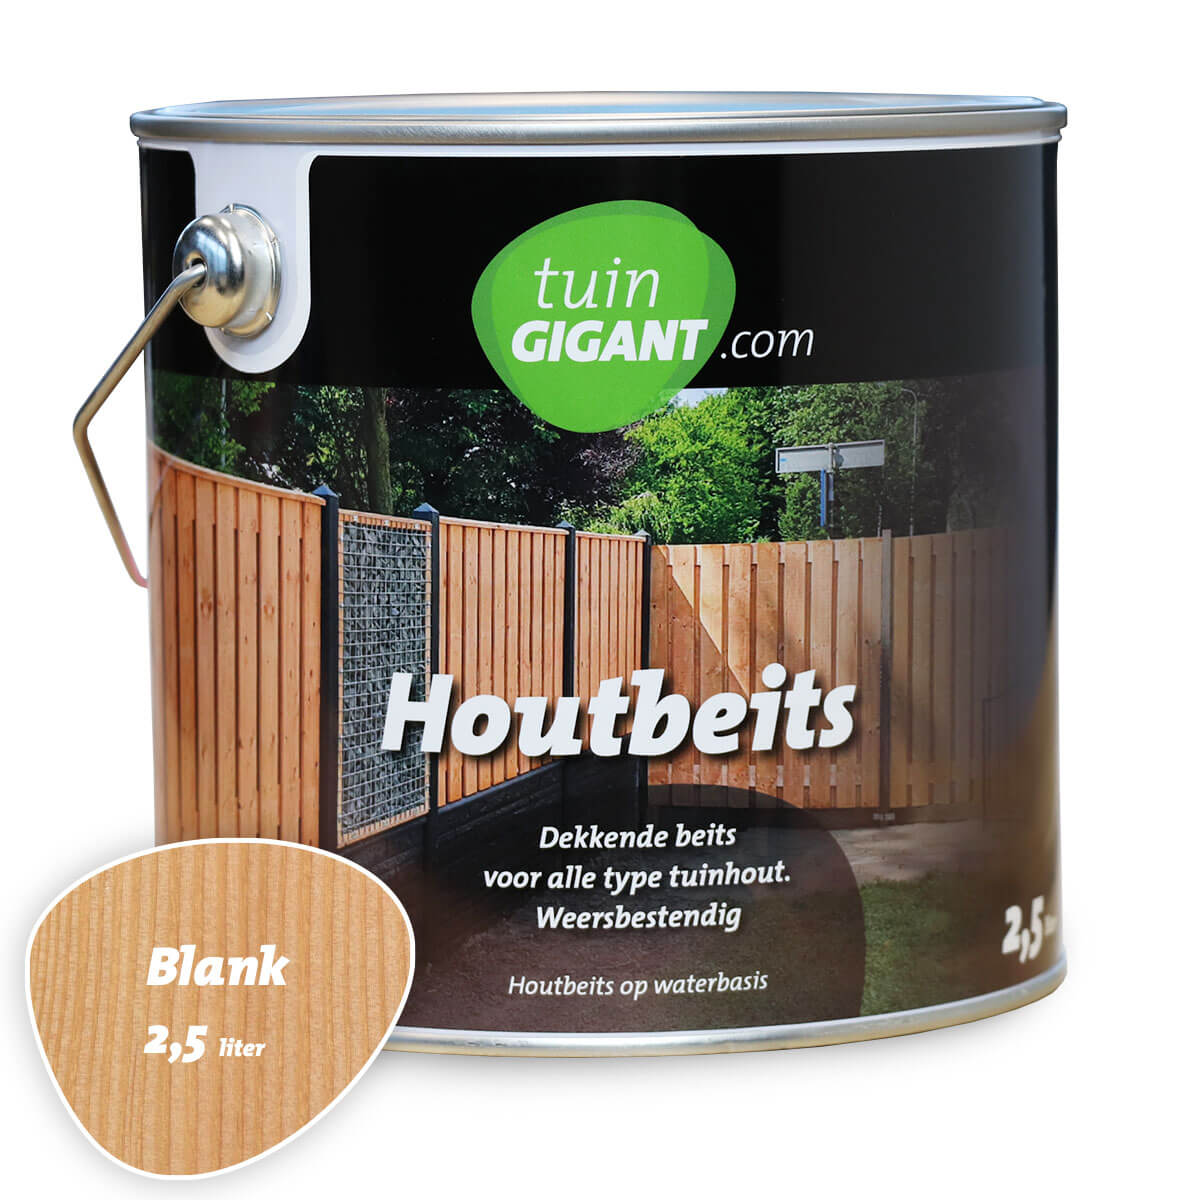 Houtbeits - Blank liter - Tuingigant.com